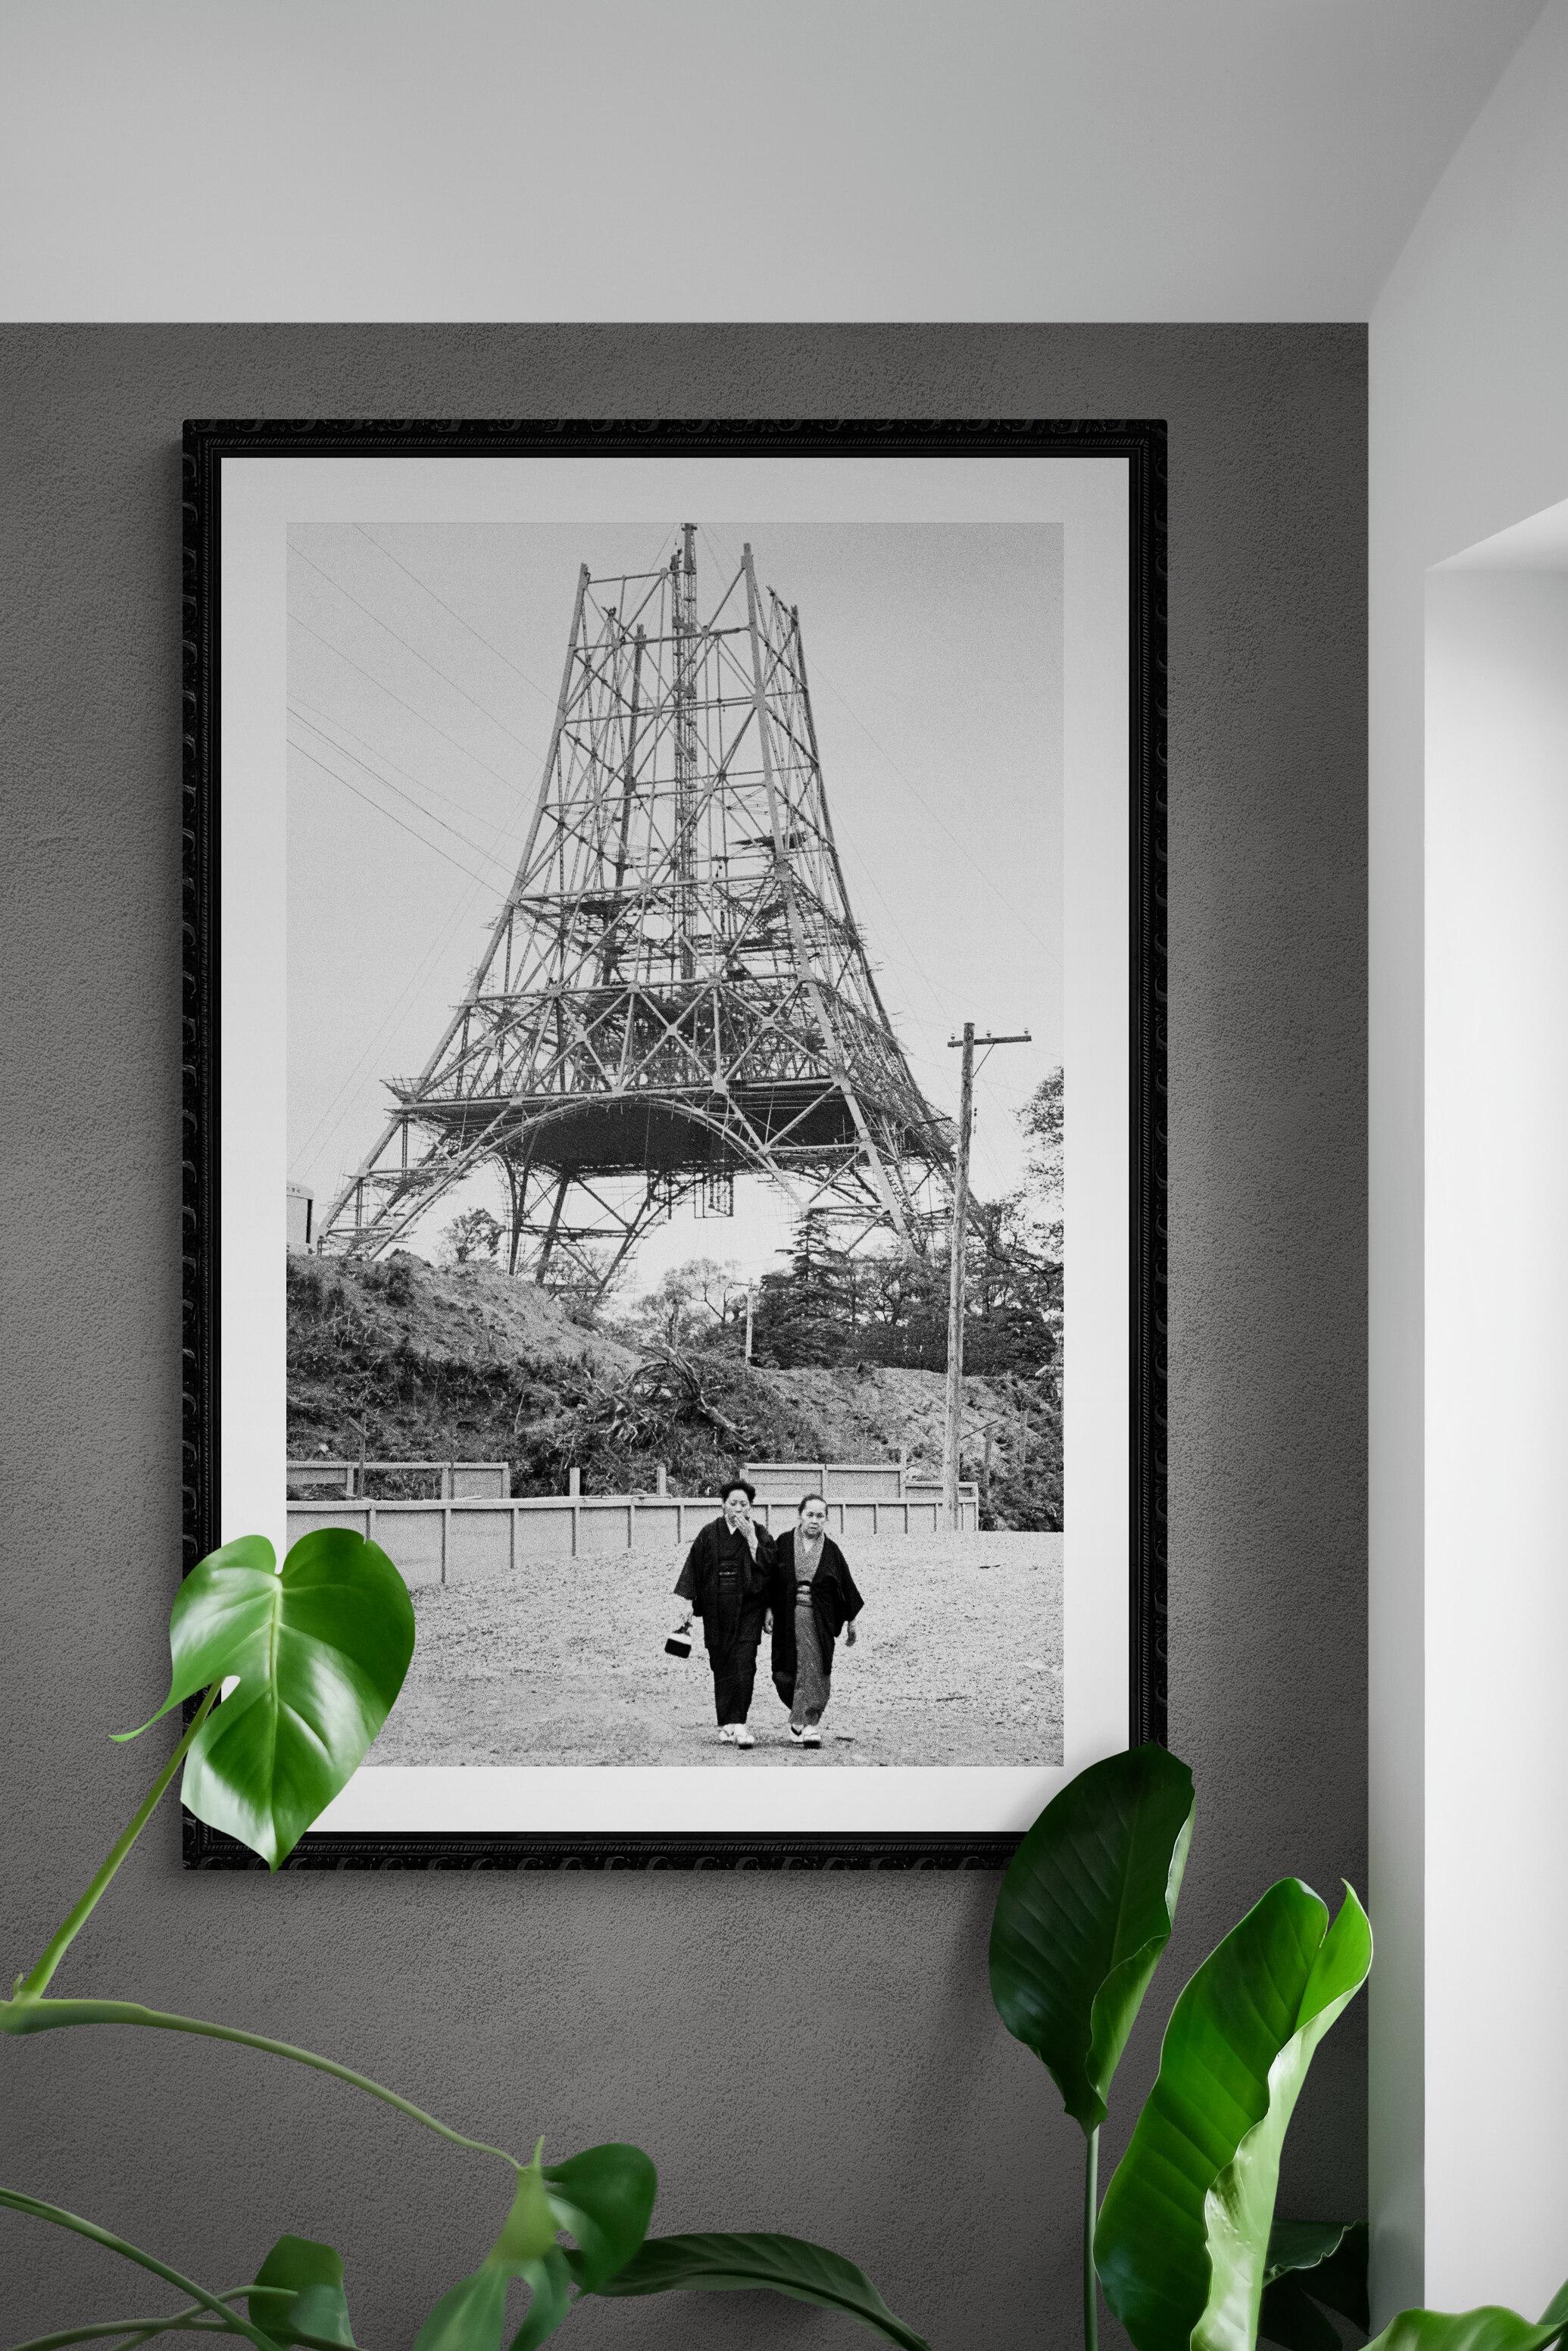  Eiffel Tower, Tokyo ( 1957 ) - Japan - Full Framed Black & White Fine Art Print - Photorealist Photograph by Fabrizio La Torre